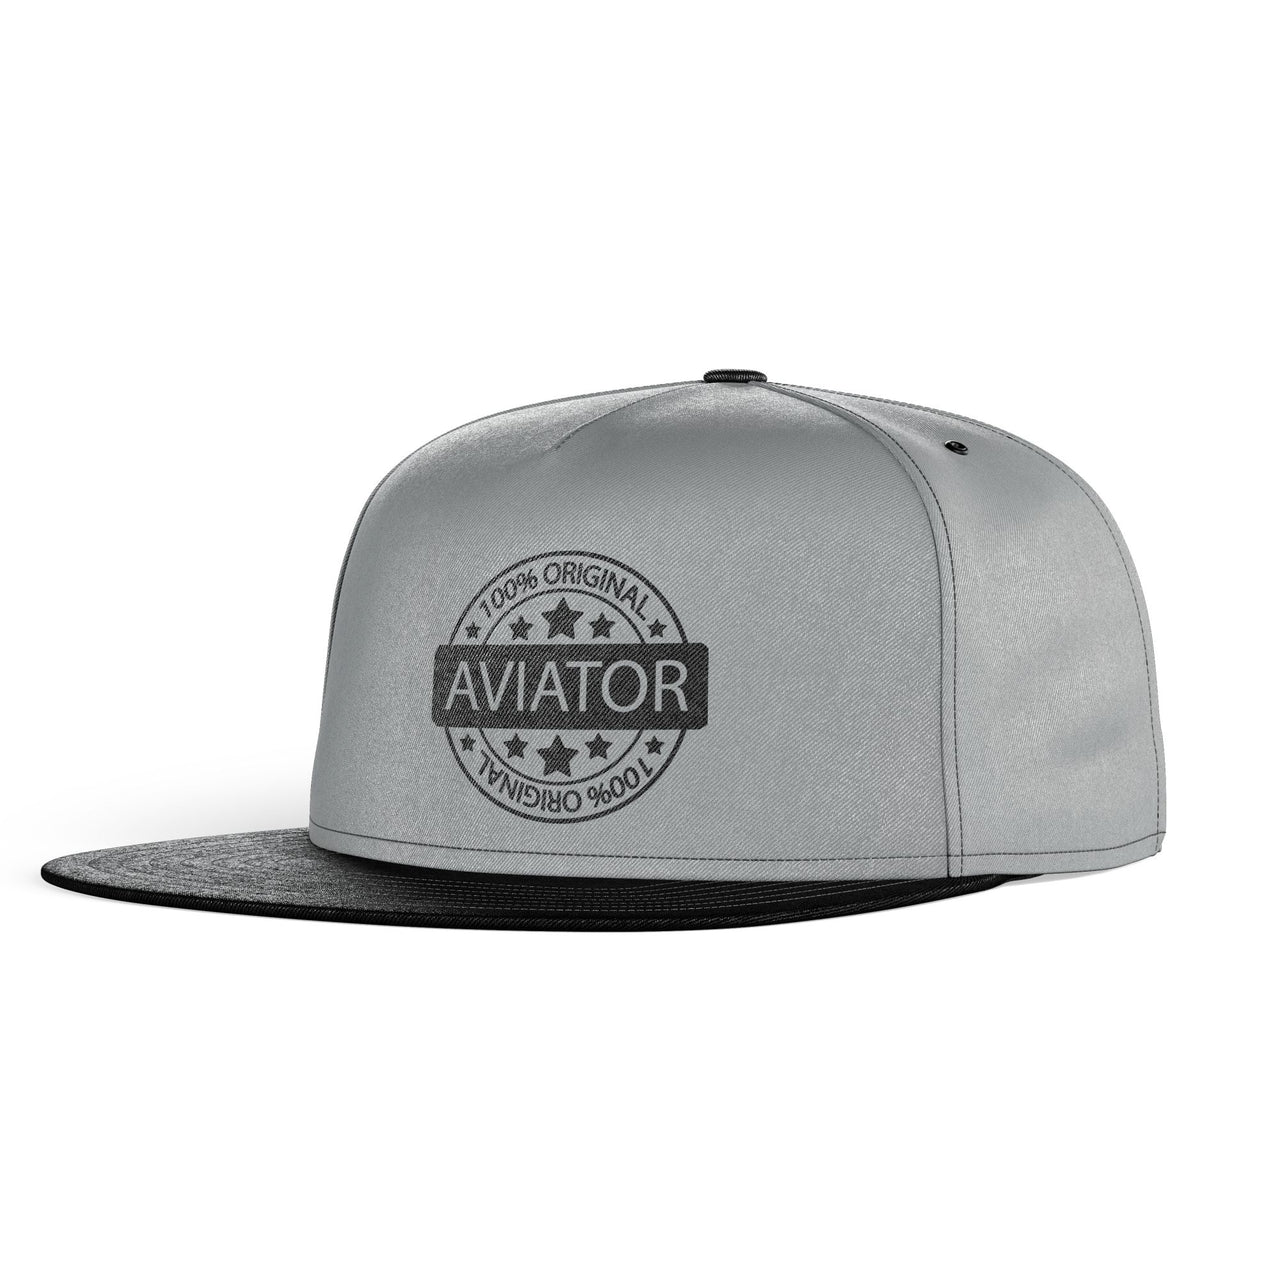 100 Original Aviator Designed Snapback Caps & Hats